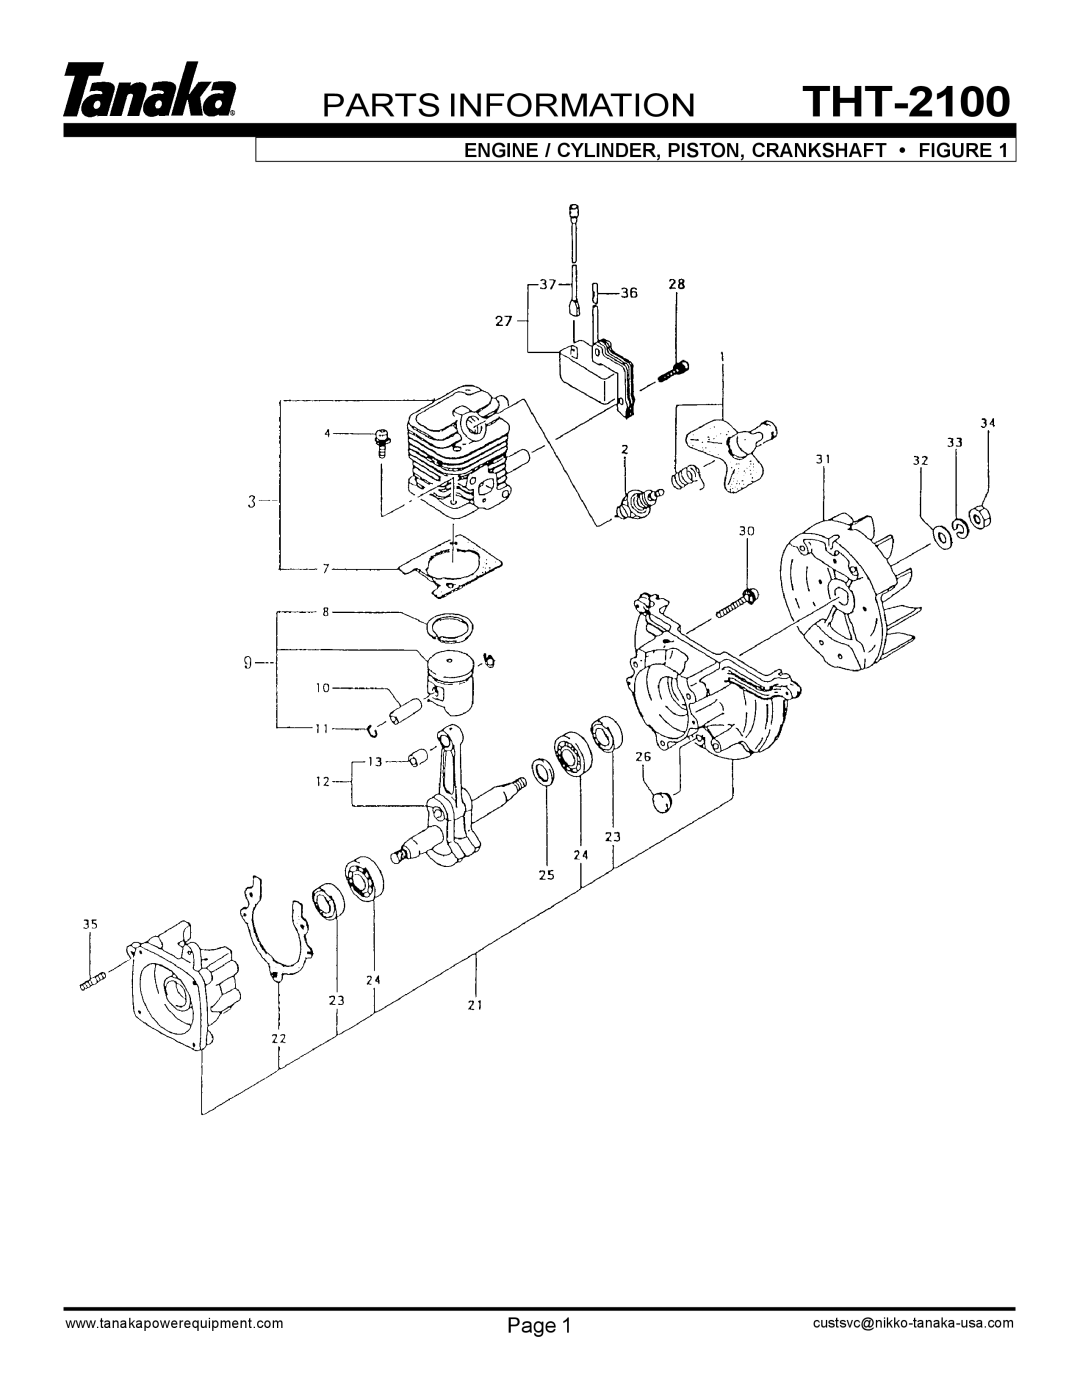 Tanaka manual Parts Information, THT-2100, Engine / Cylinder, Piston, Crankshaft Figure 